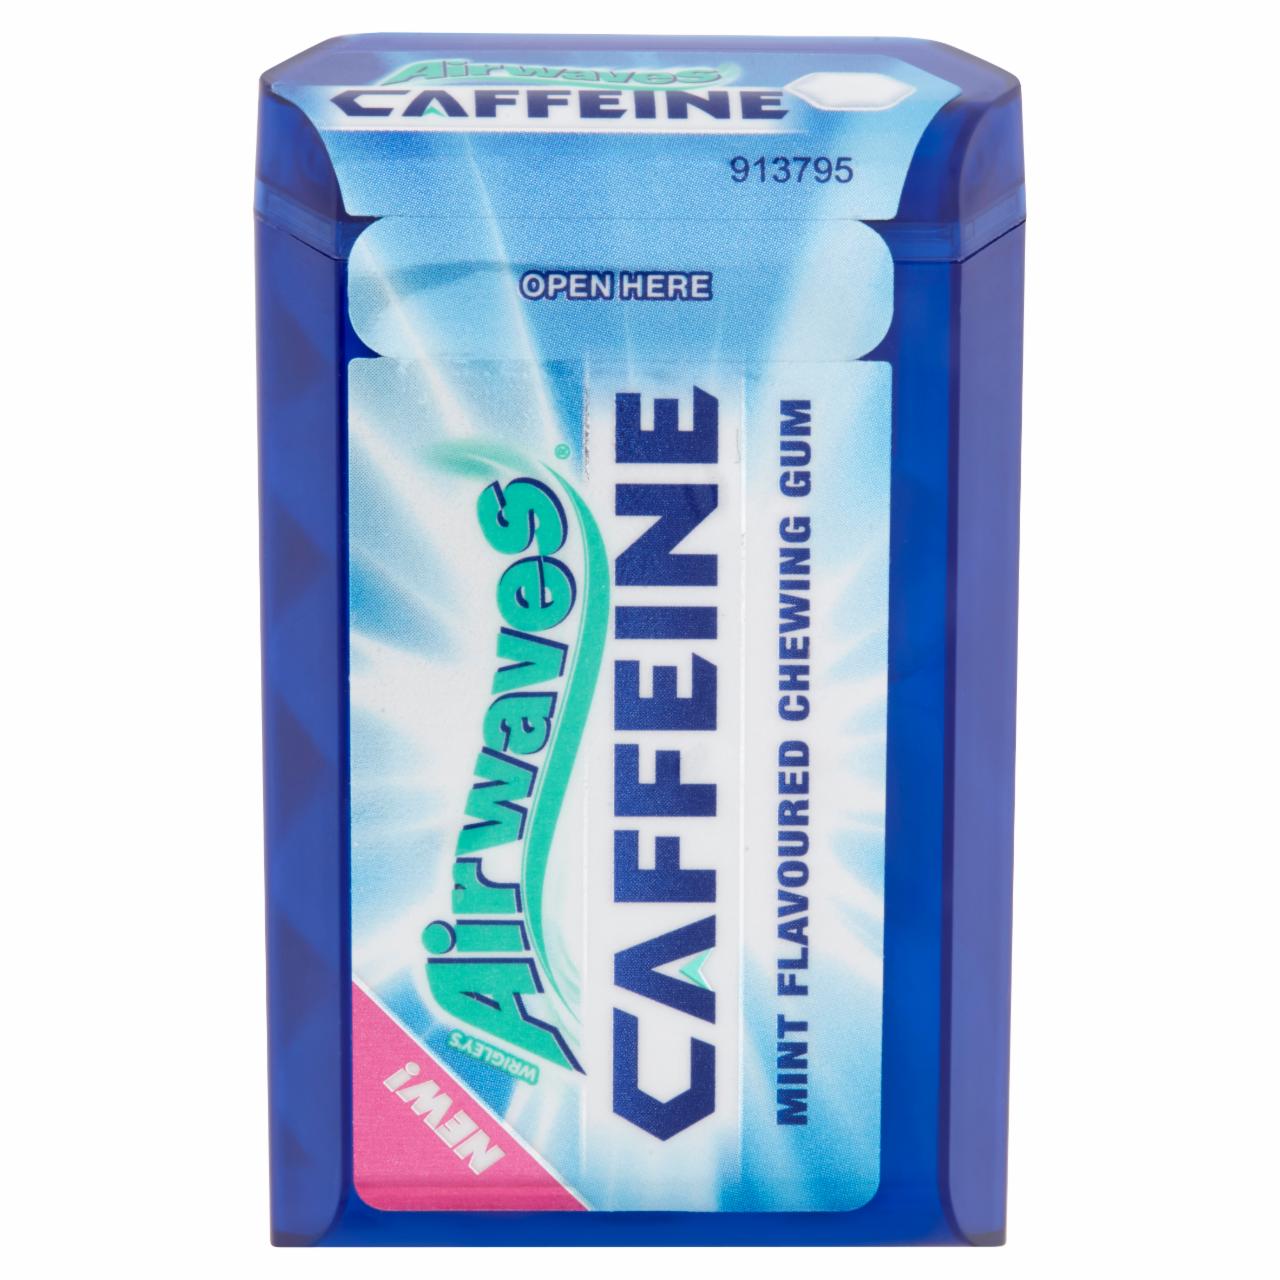 Képek - Airwaves Caffeine mentaízű rágógumi koffeinnel 18,8 g